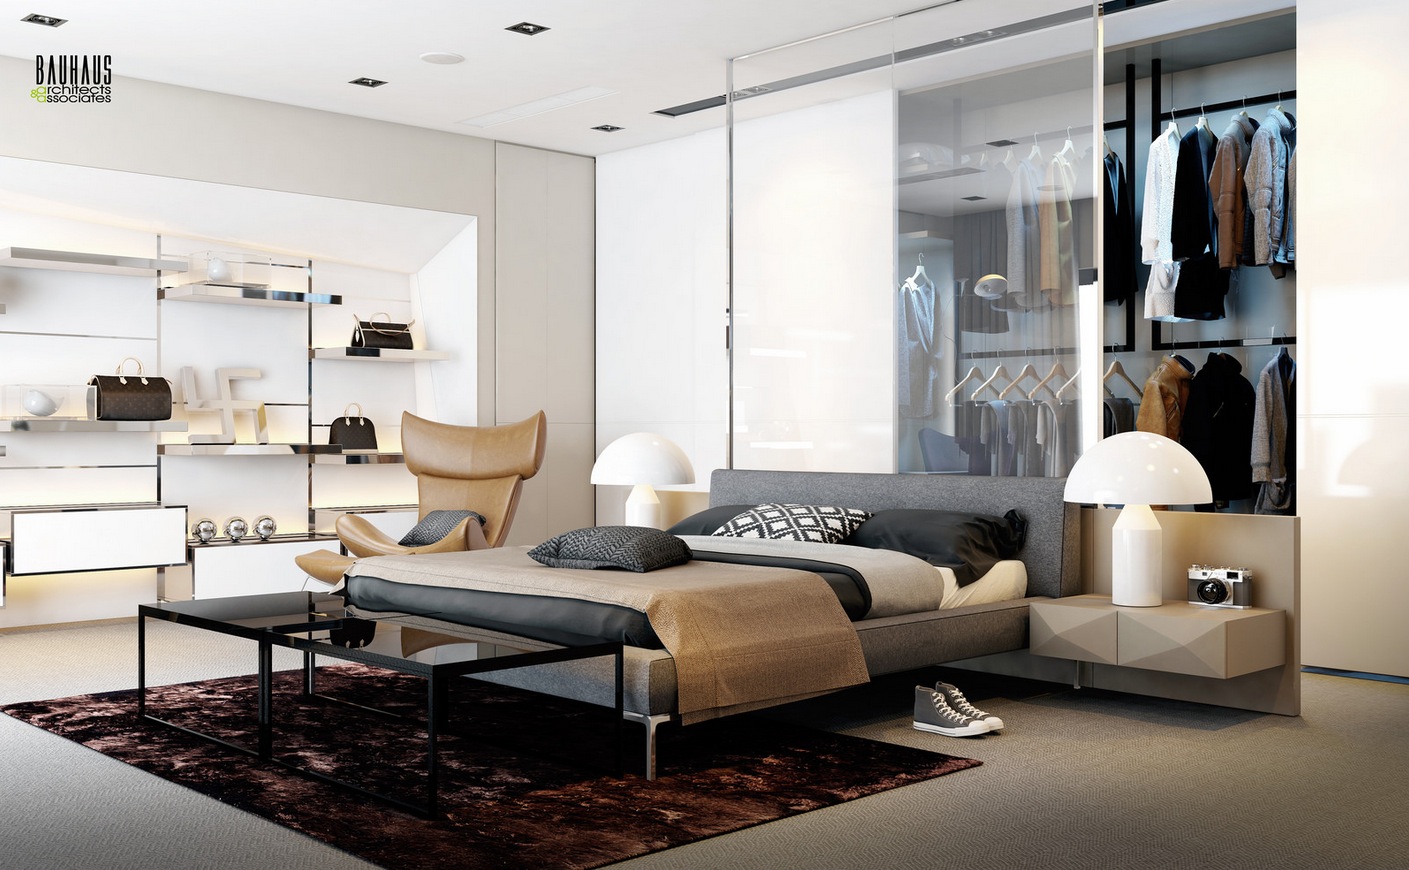 Bauhaus Style Living Room Interior Stock Illustration 1480245707 |  Shutterstock